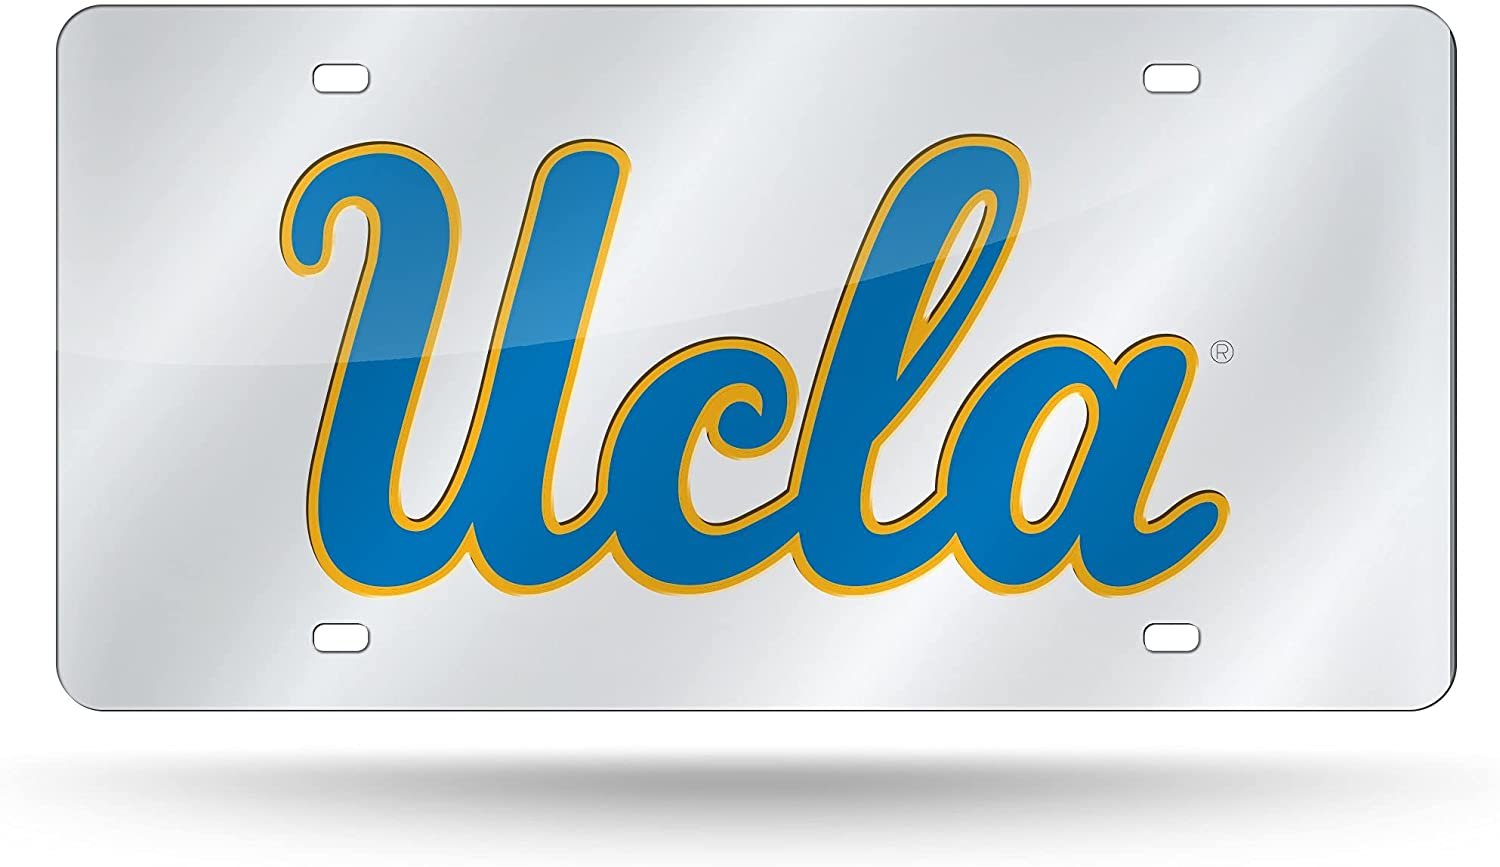 UCLA Bruins Premium Laser Cut Tag License Plate, Mirrored Acrylic Inlaid, 12x6 Inch